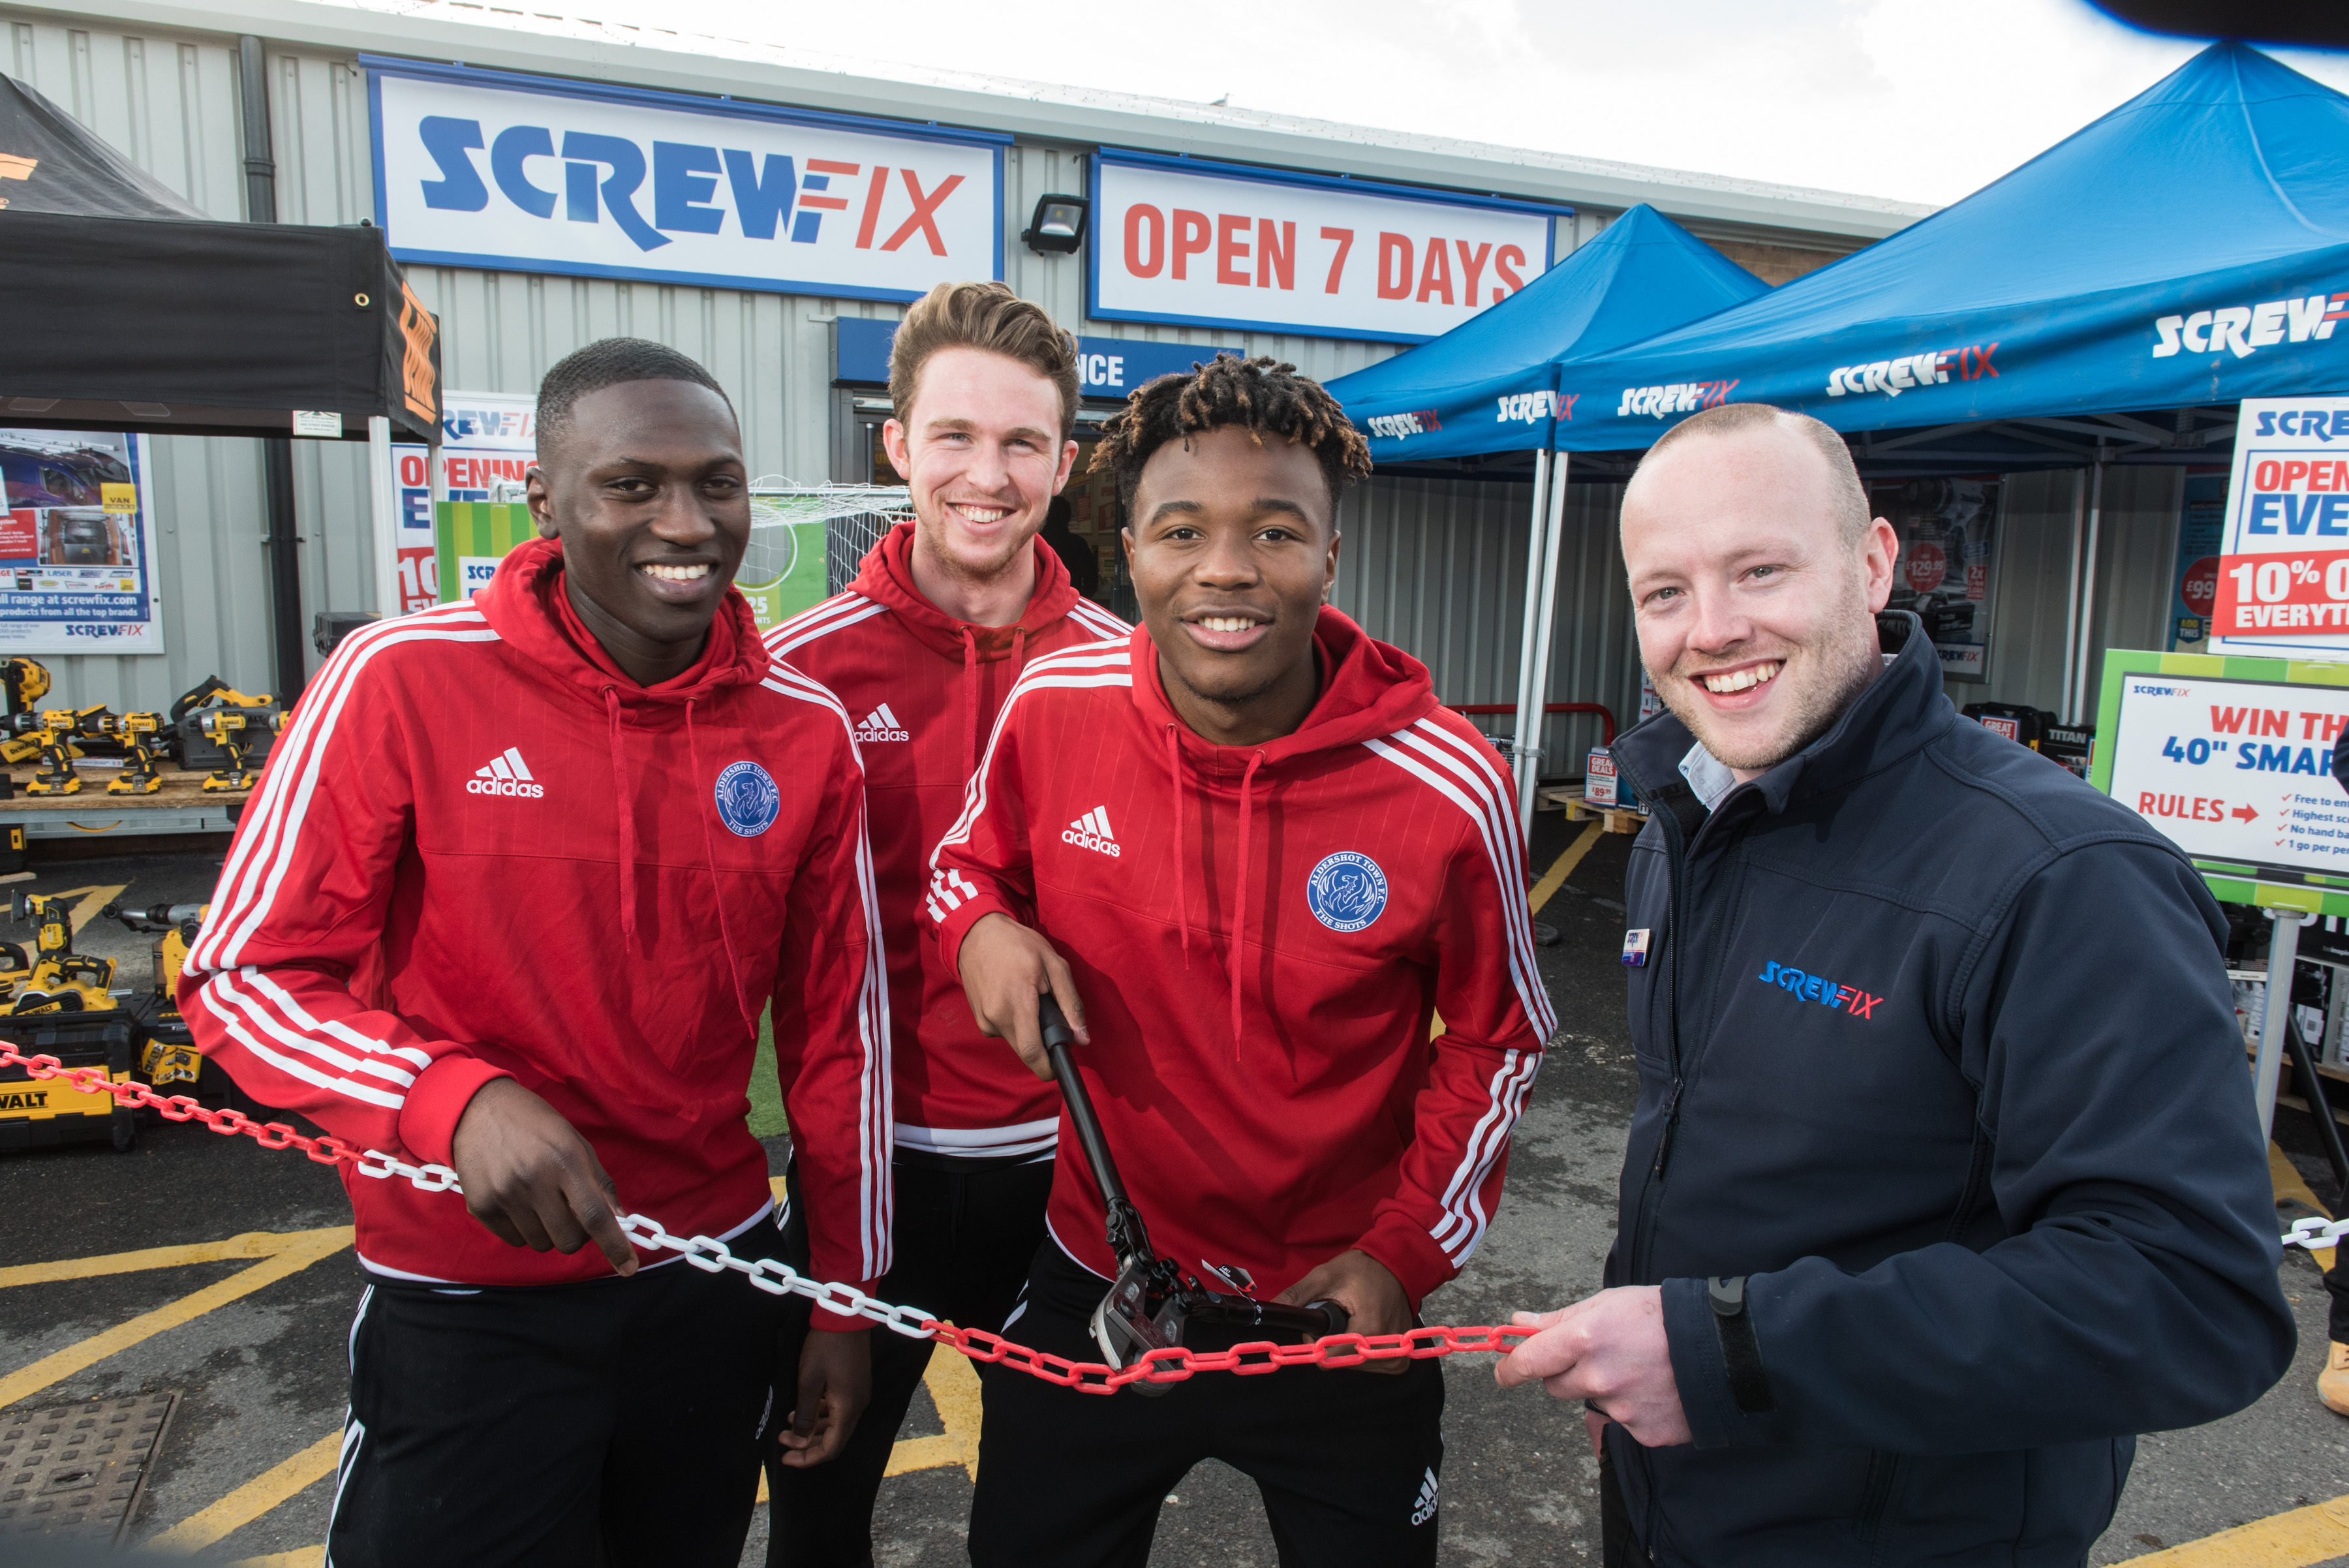 Aldershot celebrates new Screwfix store opening